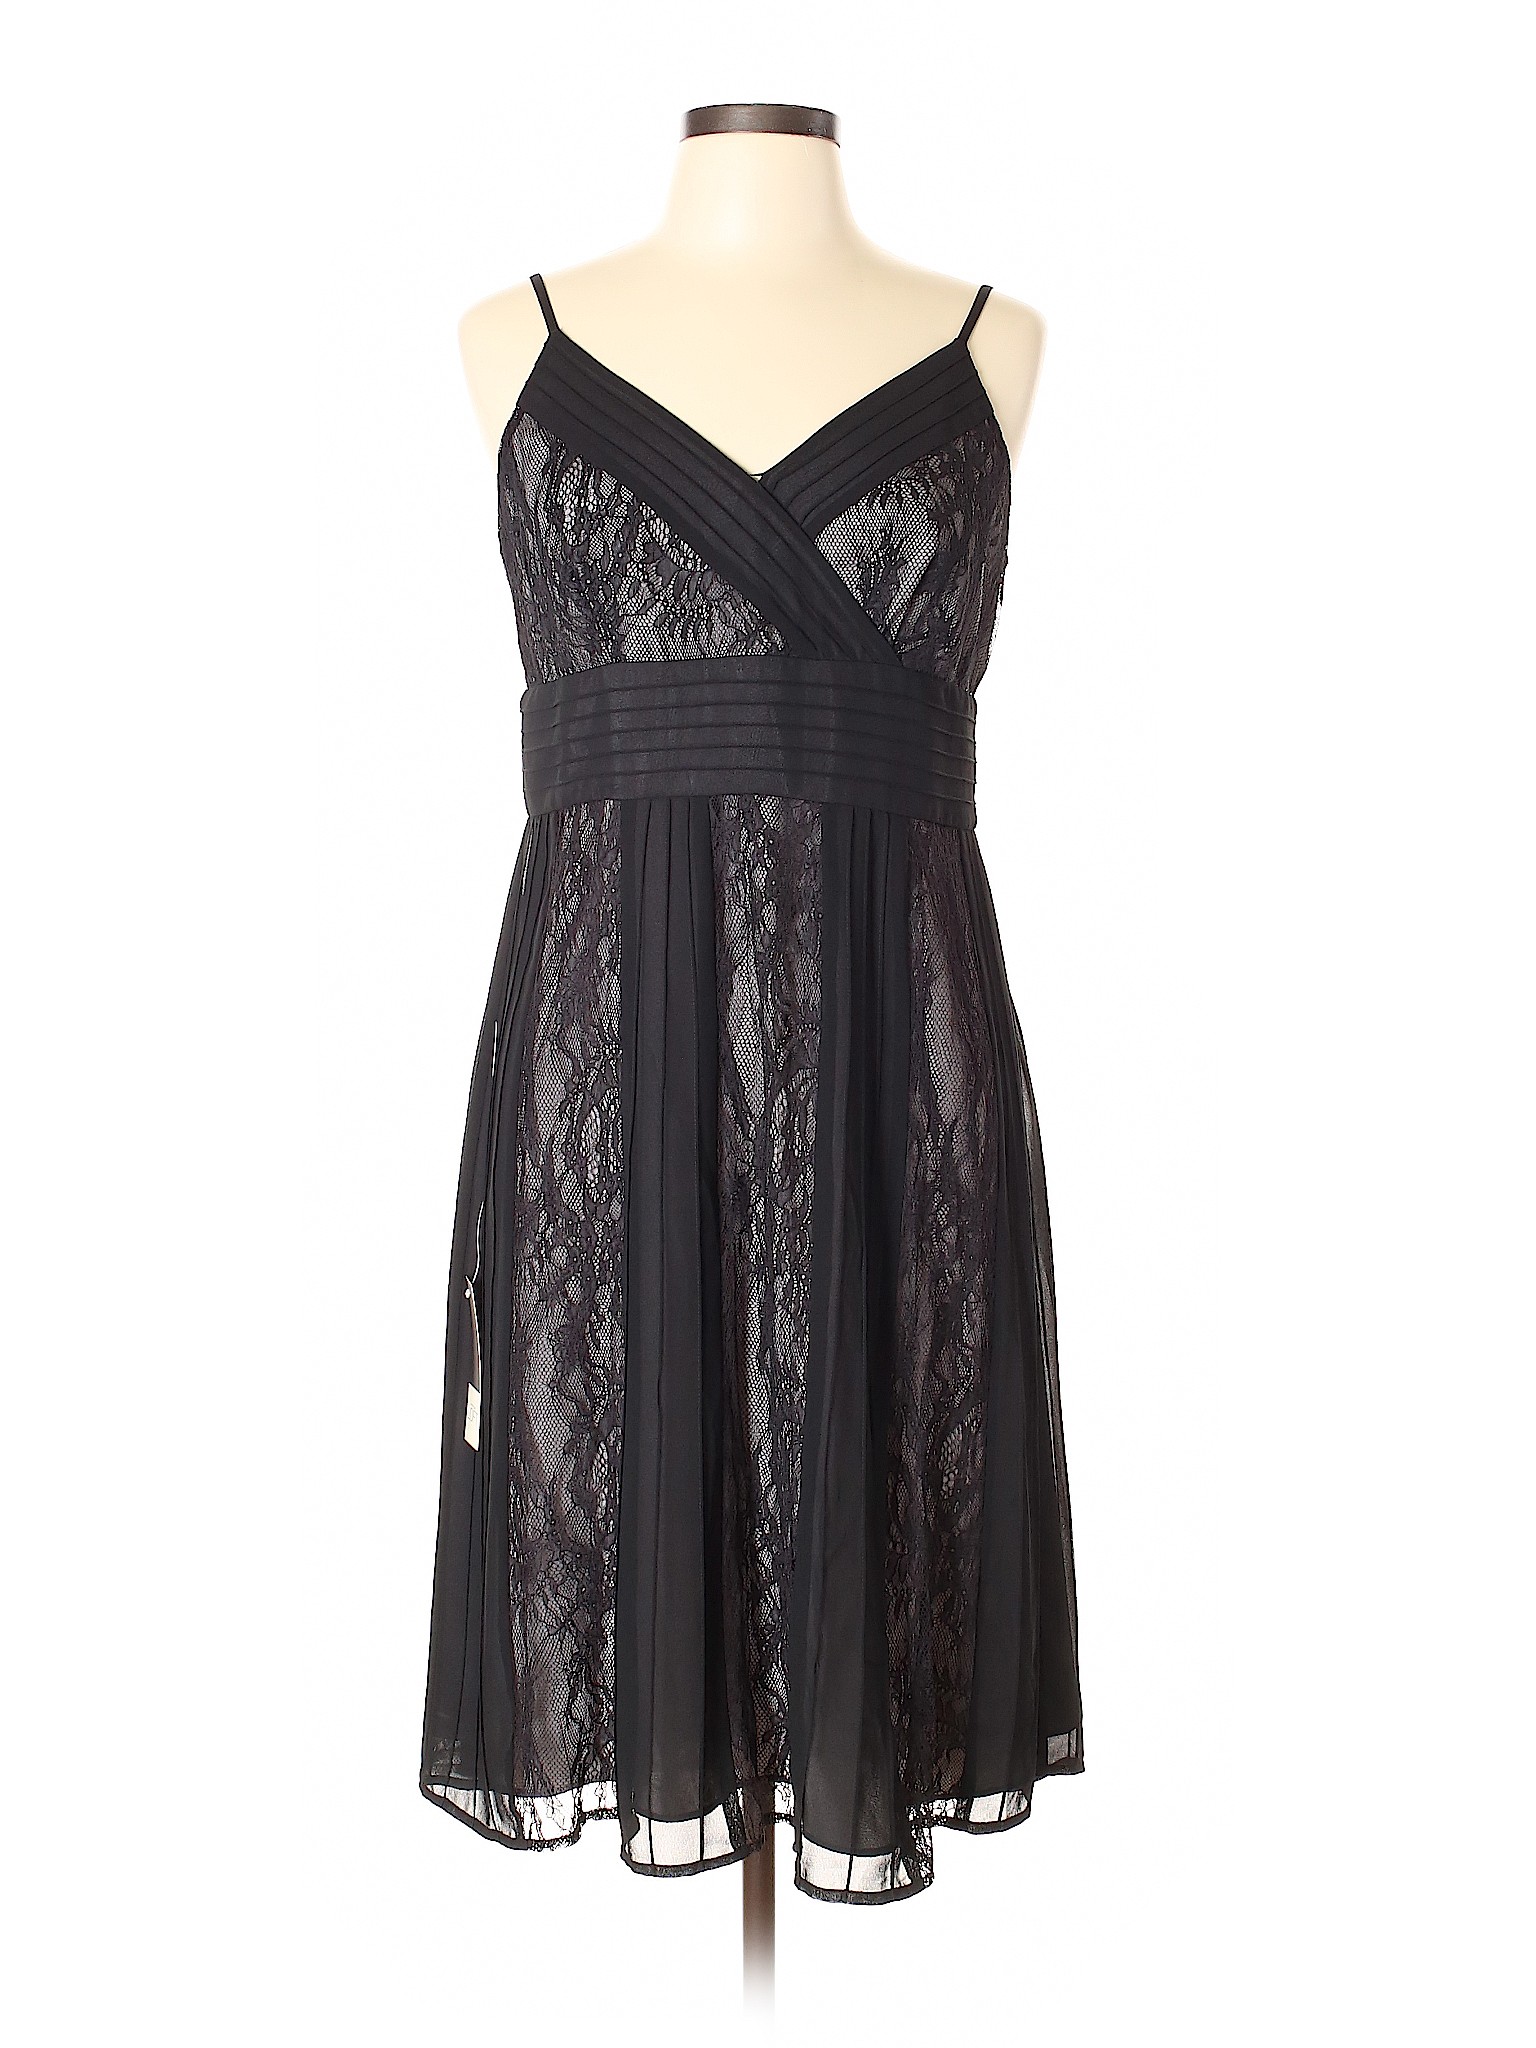 NWT Ann Taylor Loft Women Black Cocktail Dress 12 Petite | eBay